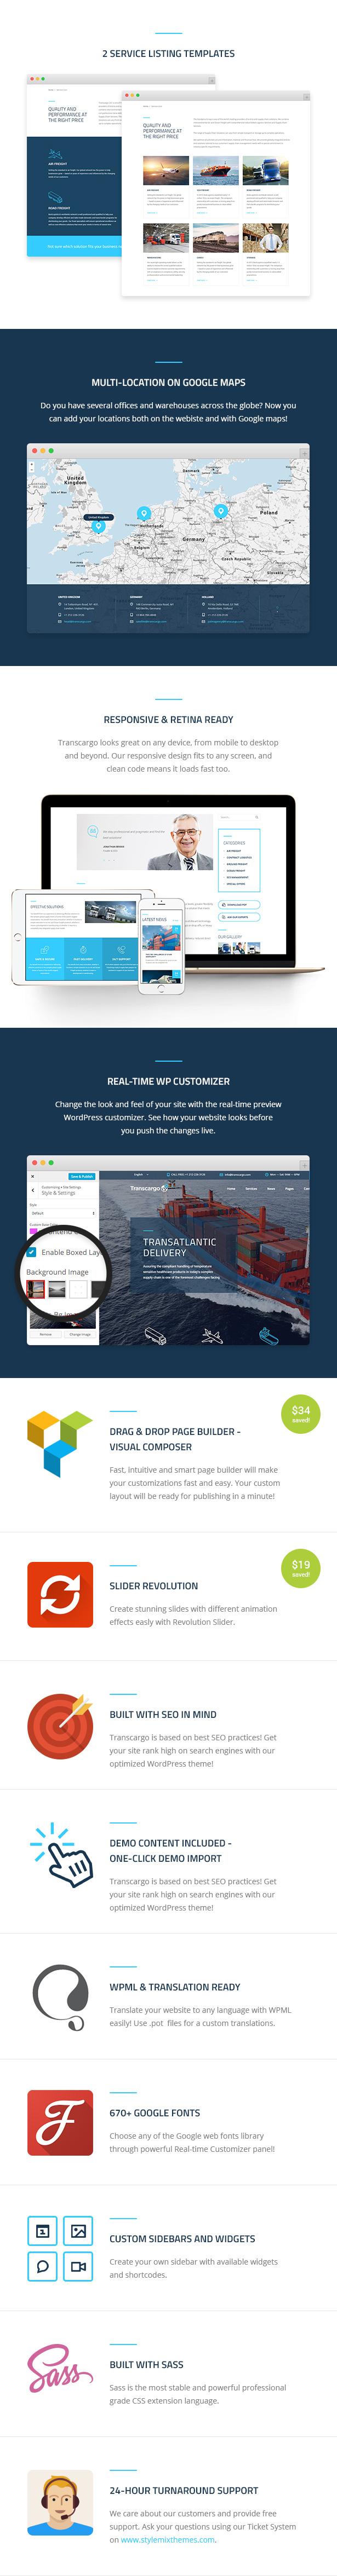 Transcargo - Transport WordPress Theme for Transportation, Logistics and Shipping Companies - 4